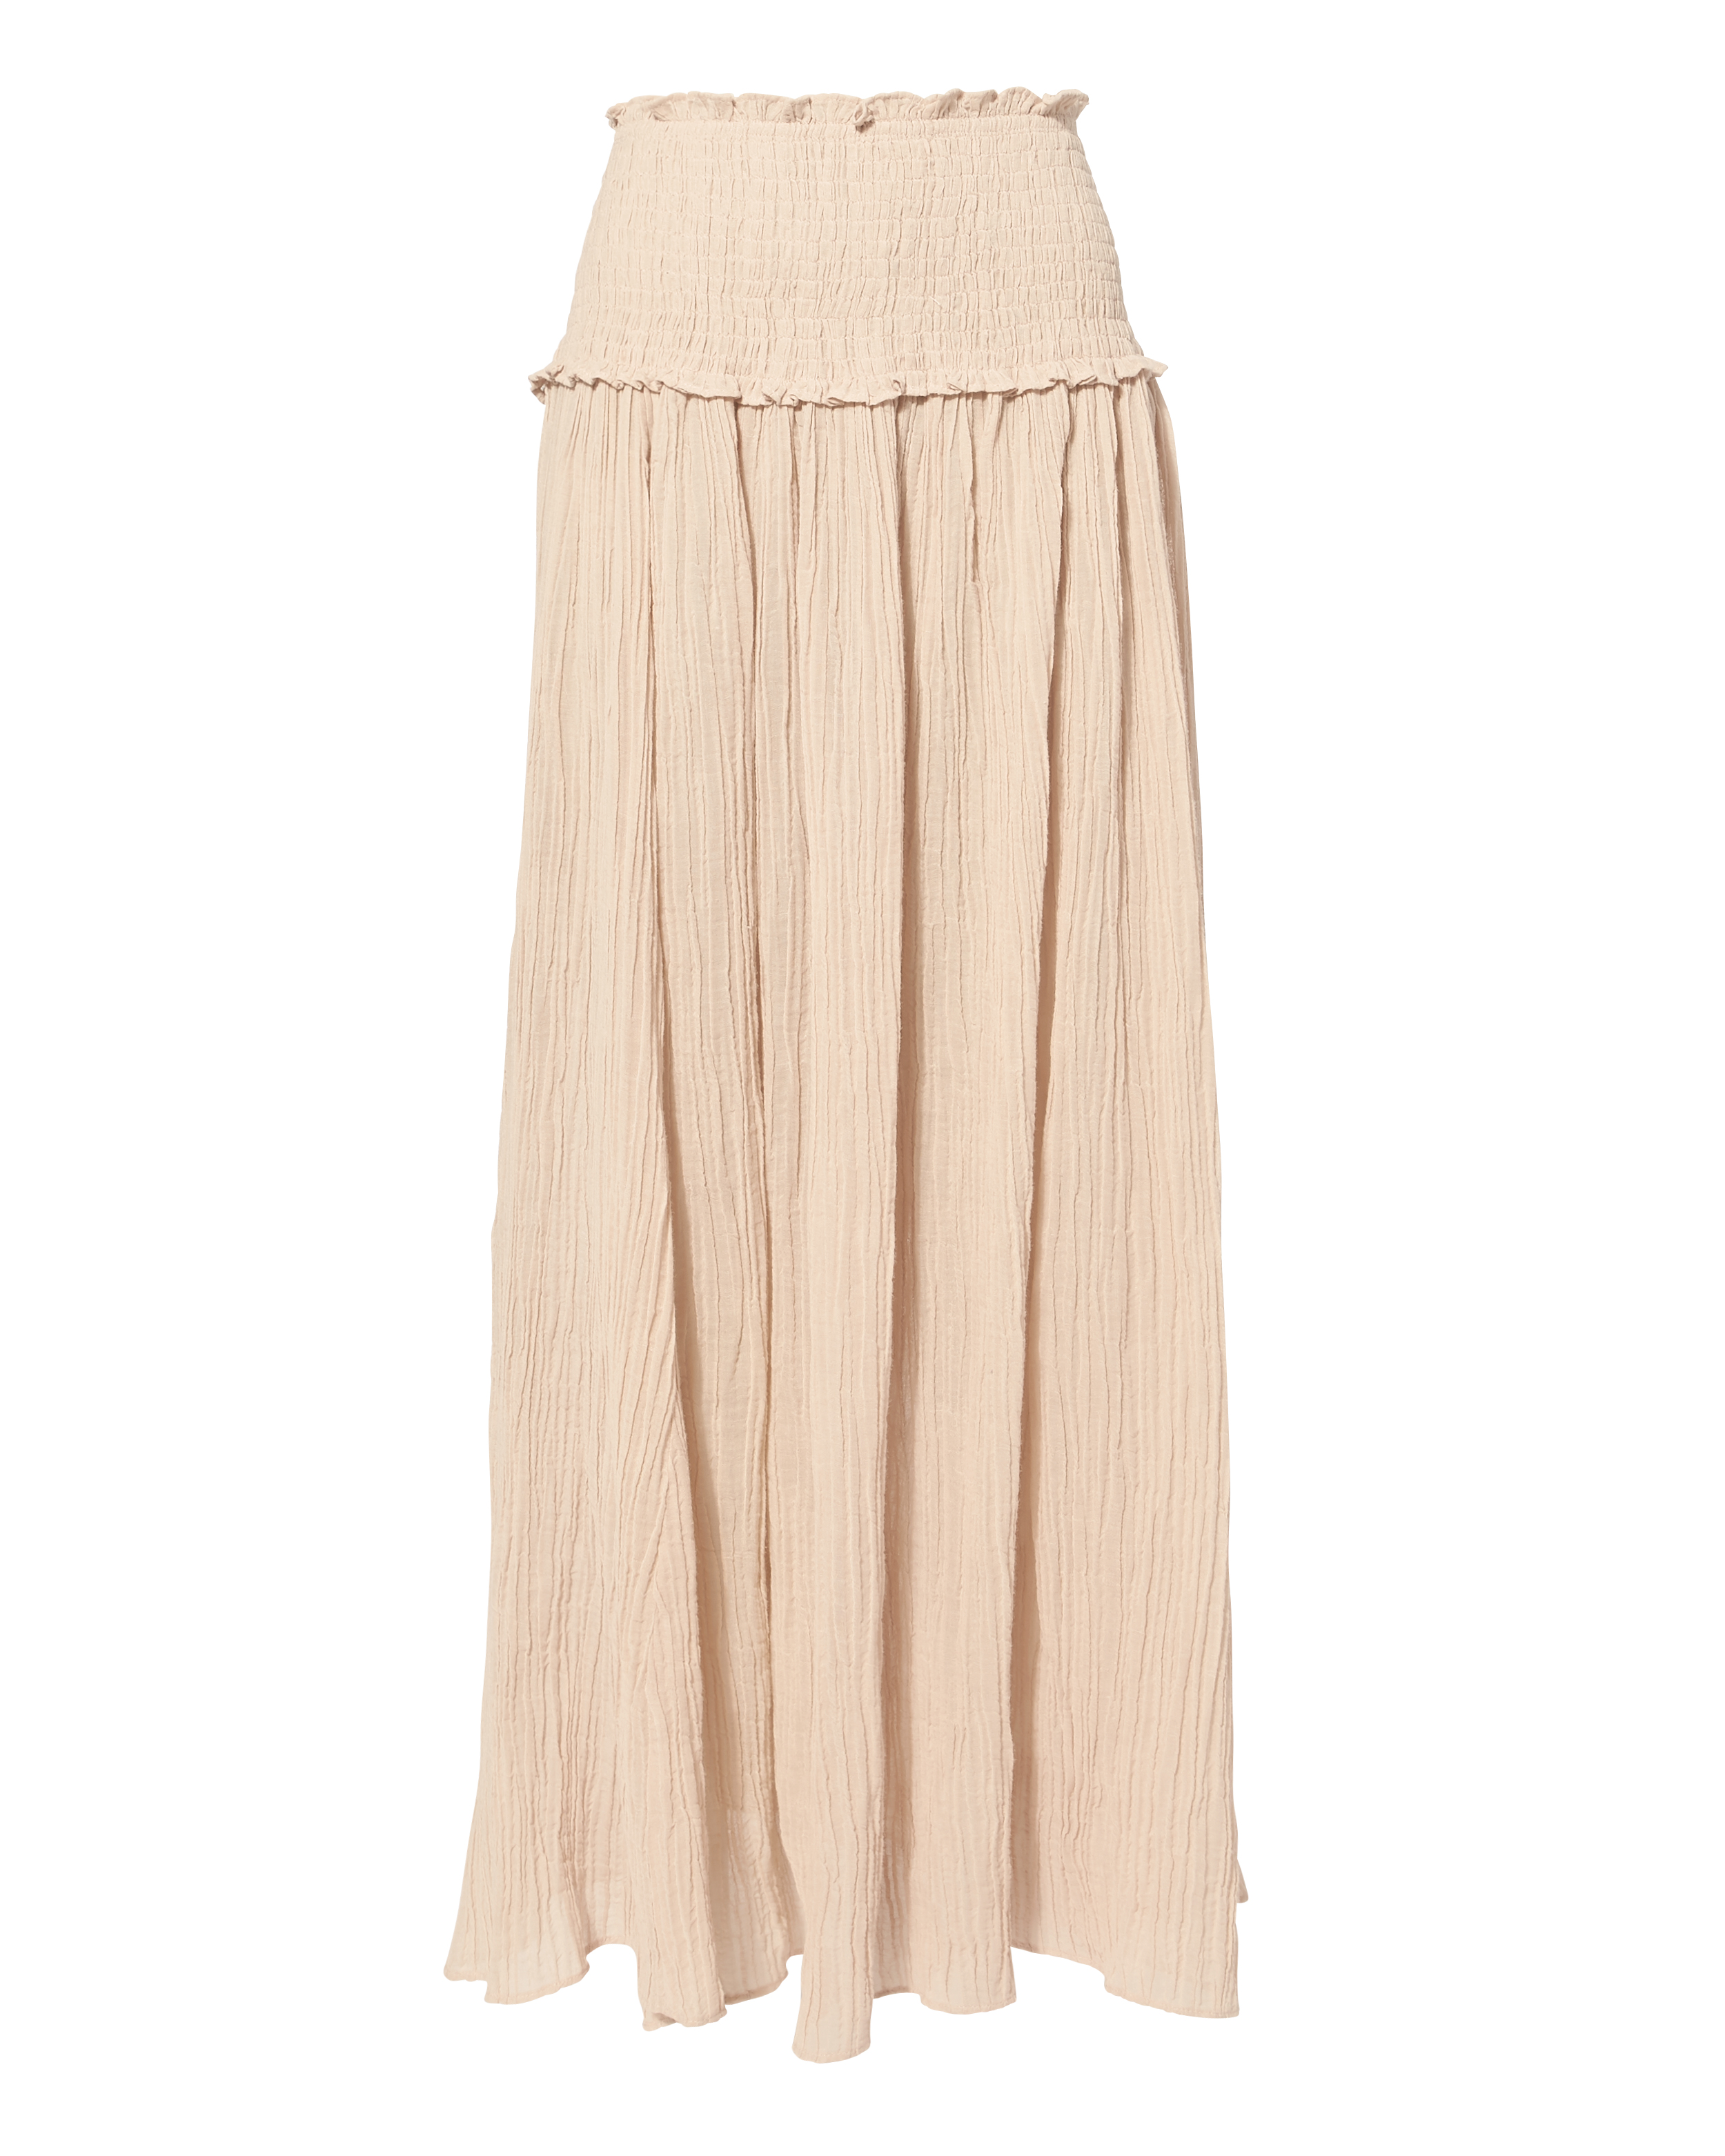 Bayou Shirred Skirt